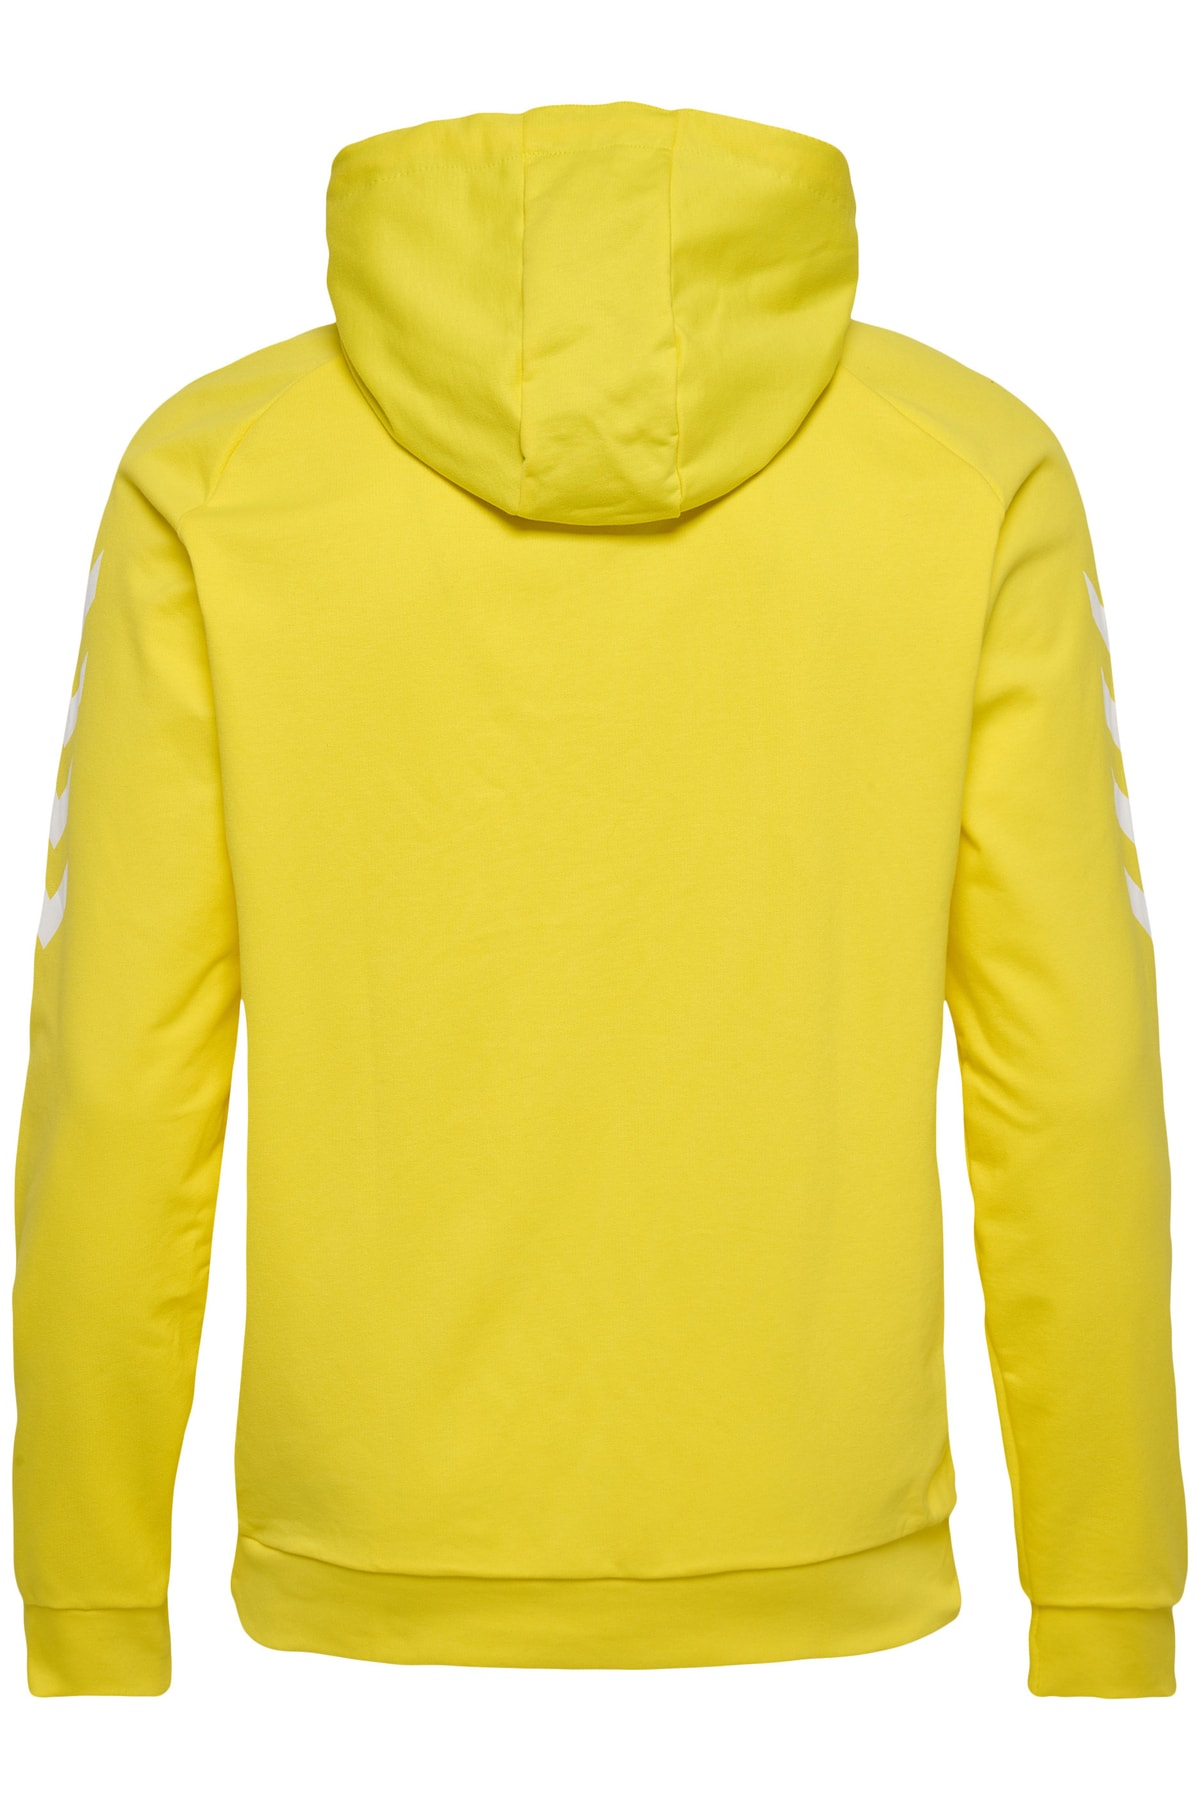 HUMMEL Sweatshirt Gelb Regular Fit EH6186